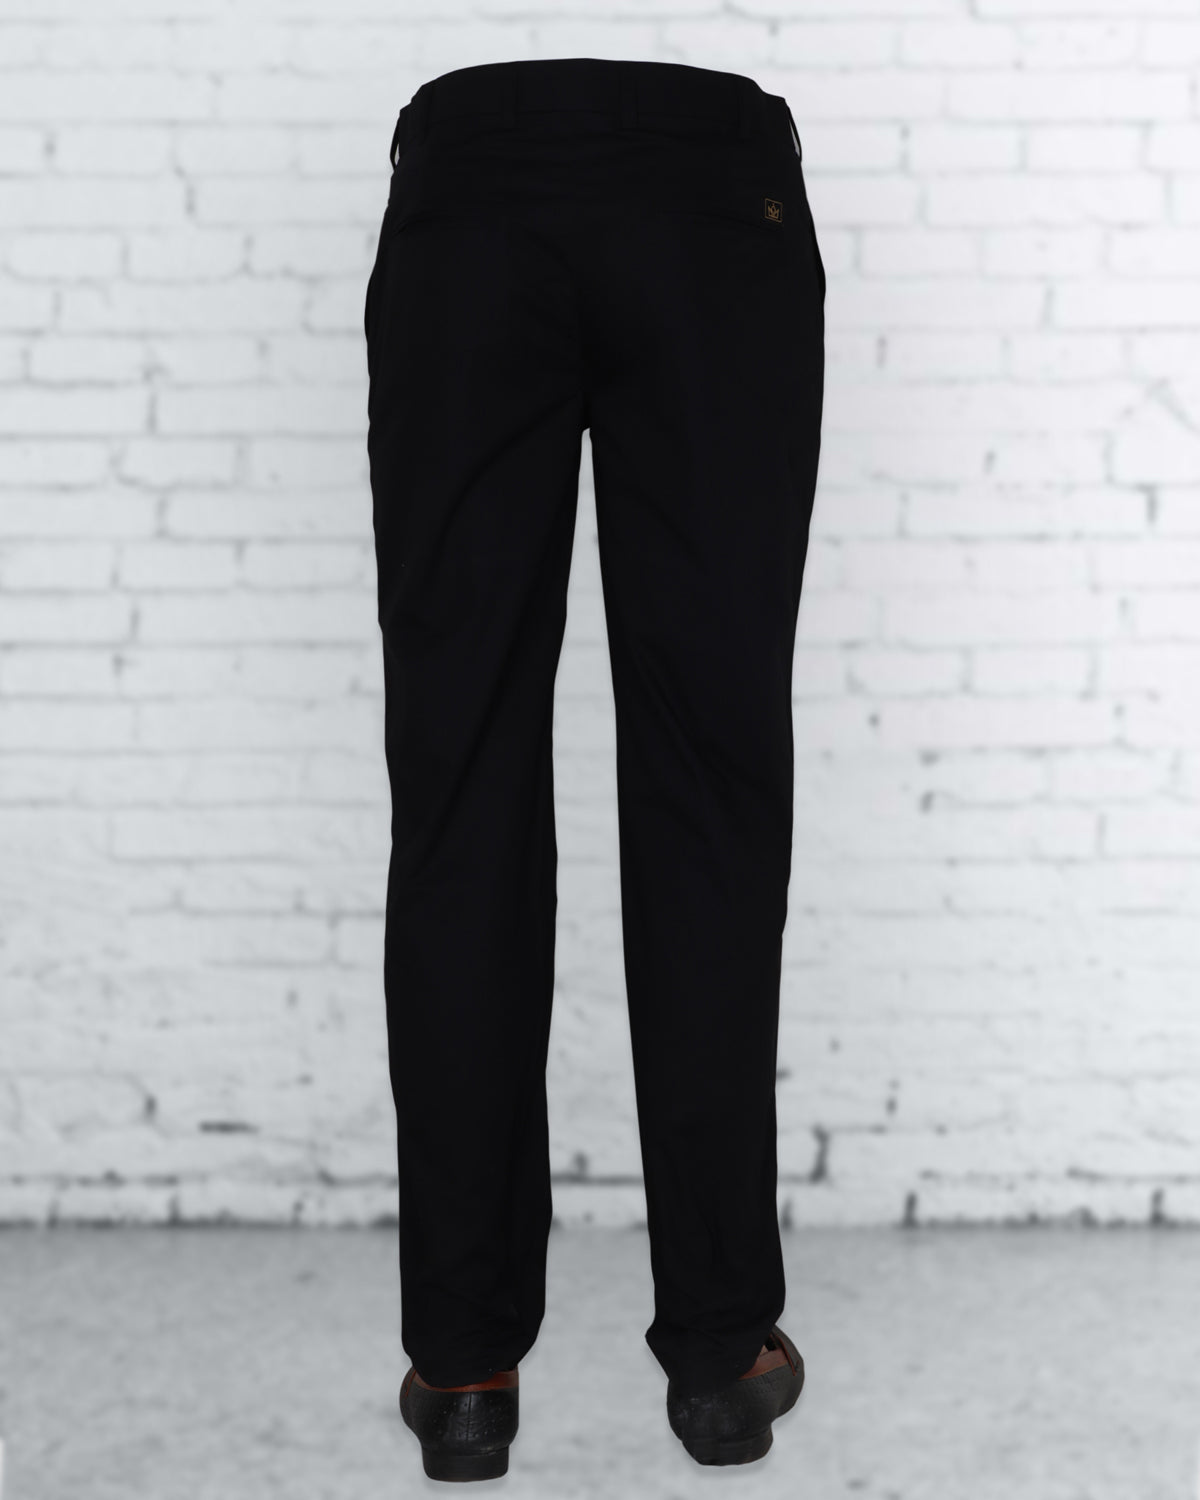 black formal trousers